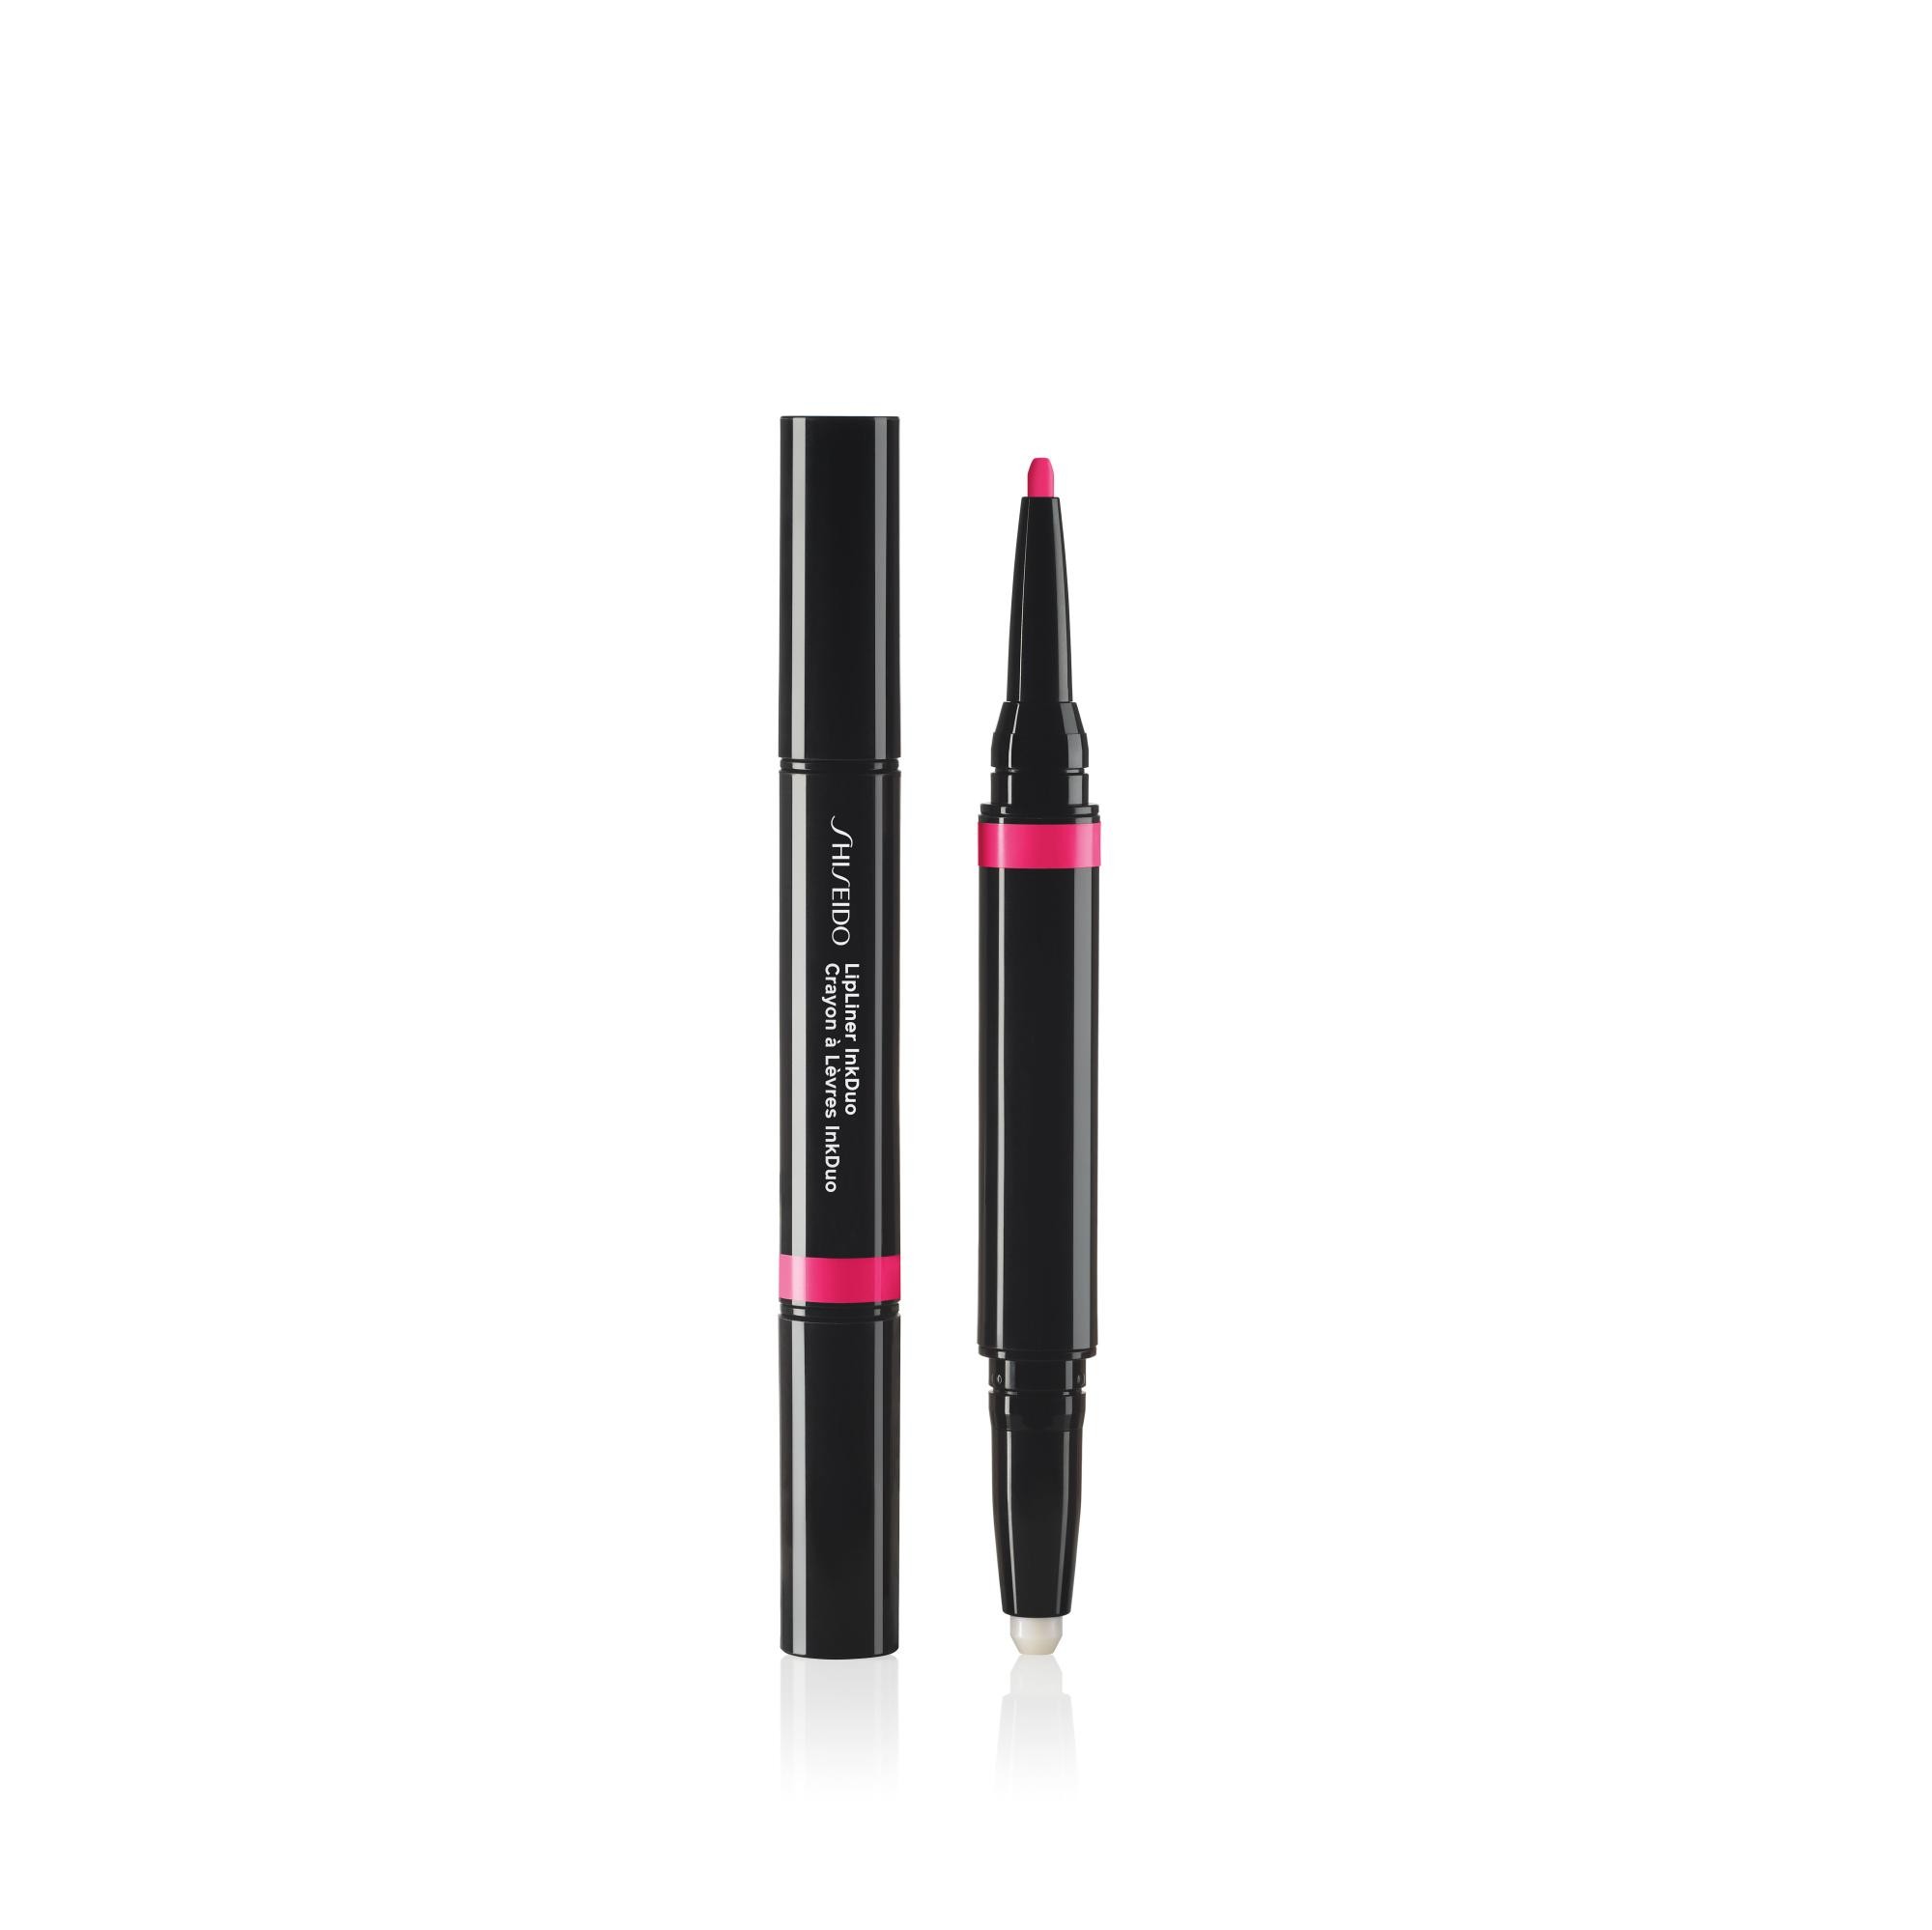 Shiseido LipLiner Ink Duo - Prime + Line Vivid Pink/MAGENTA